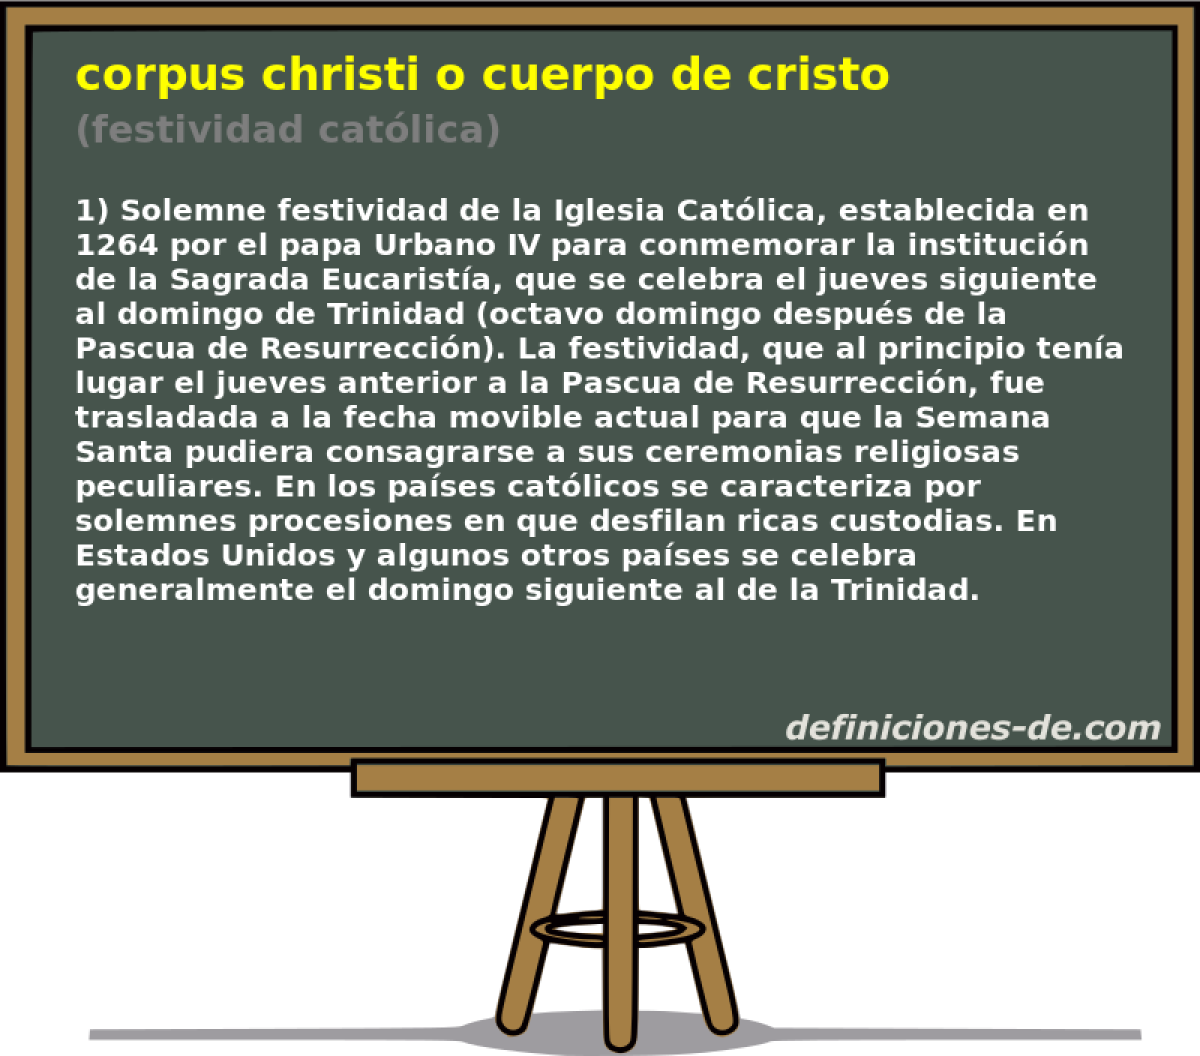 corpus christi o cuerpo de cristo (festividad catlica)